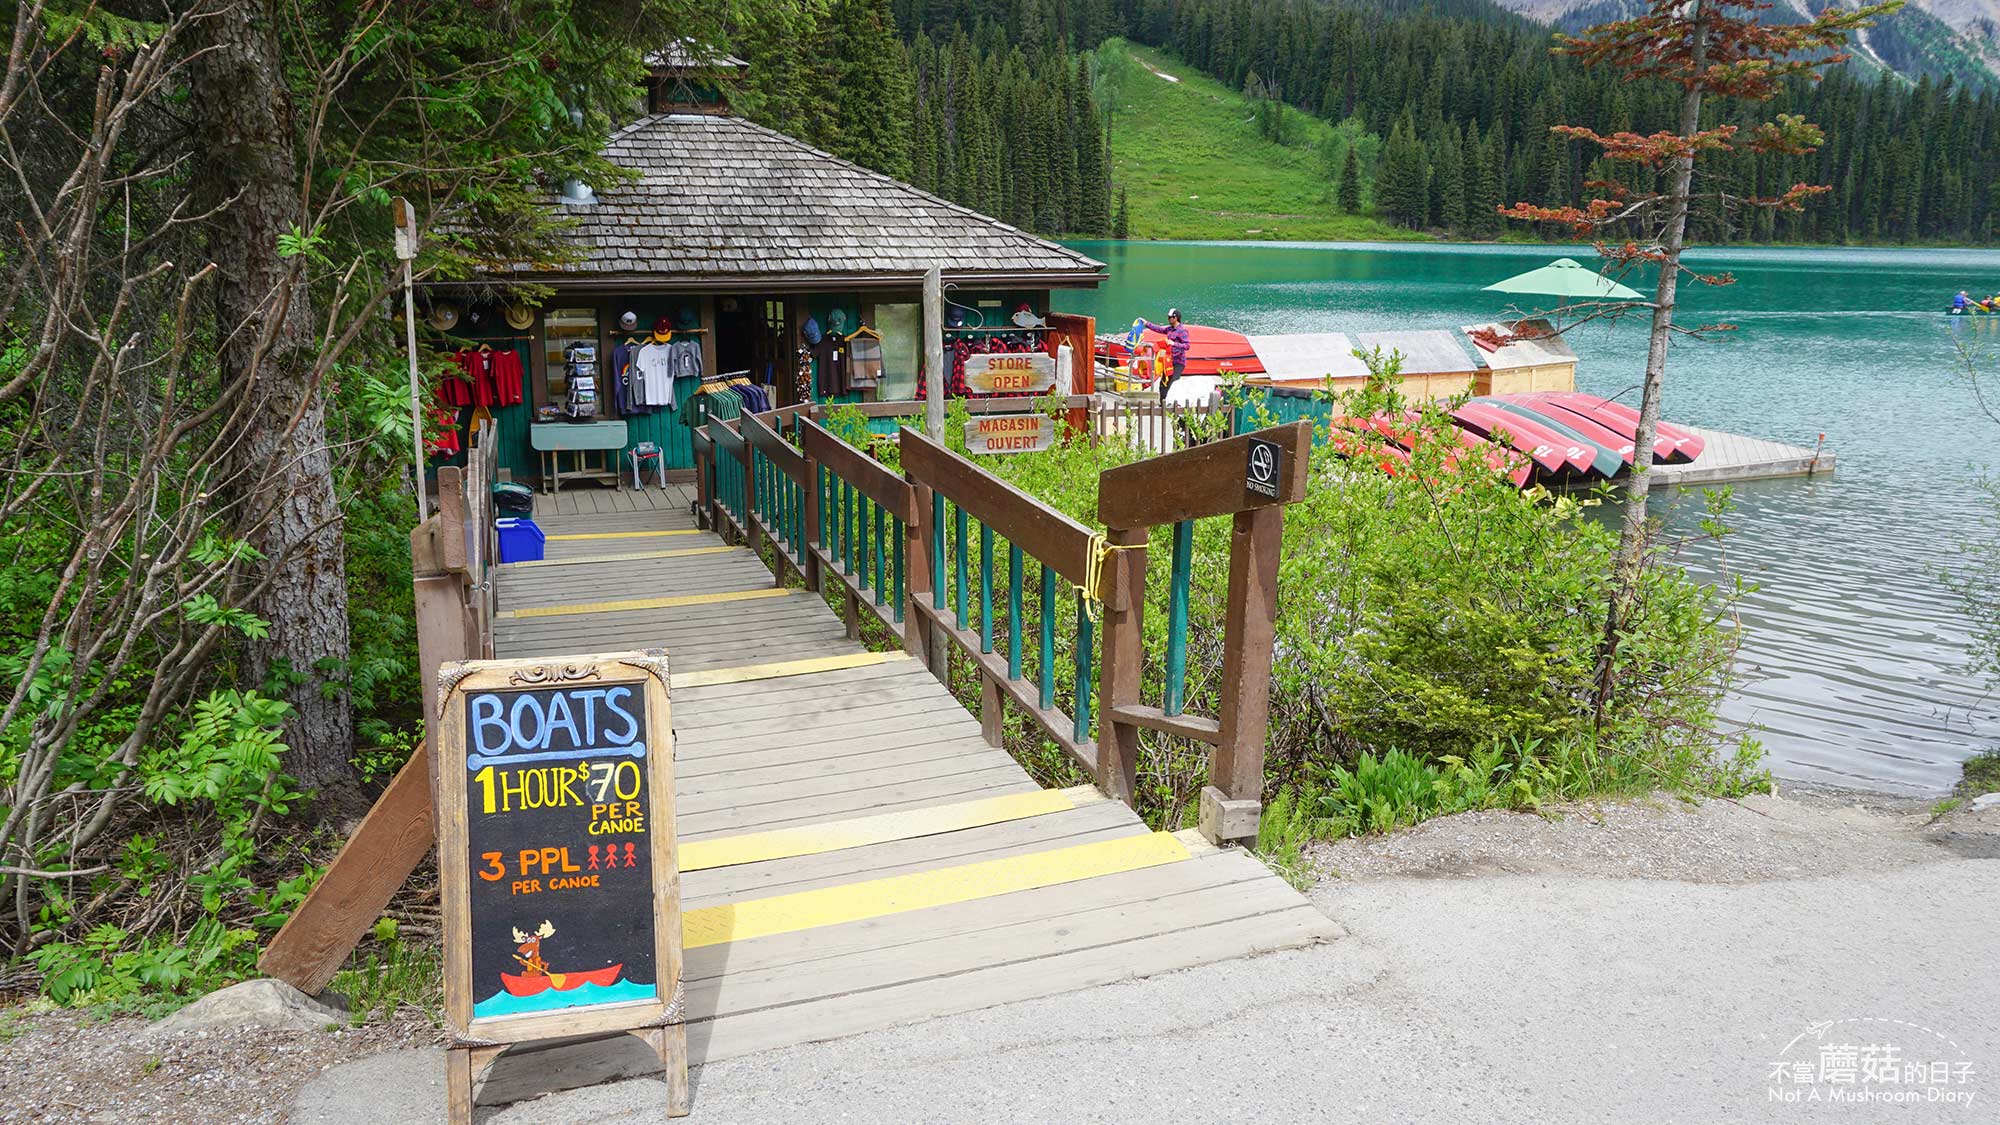 溫哥華 洛磯山 班夫 自駕 加拿大 翡翠湖 Vancouver Rocky Mountain Banff Canada Emerald Lake